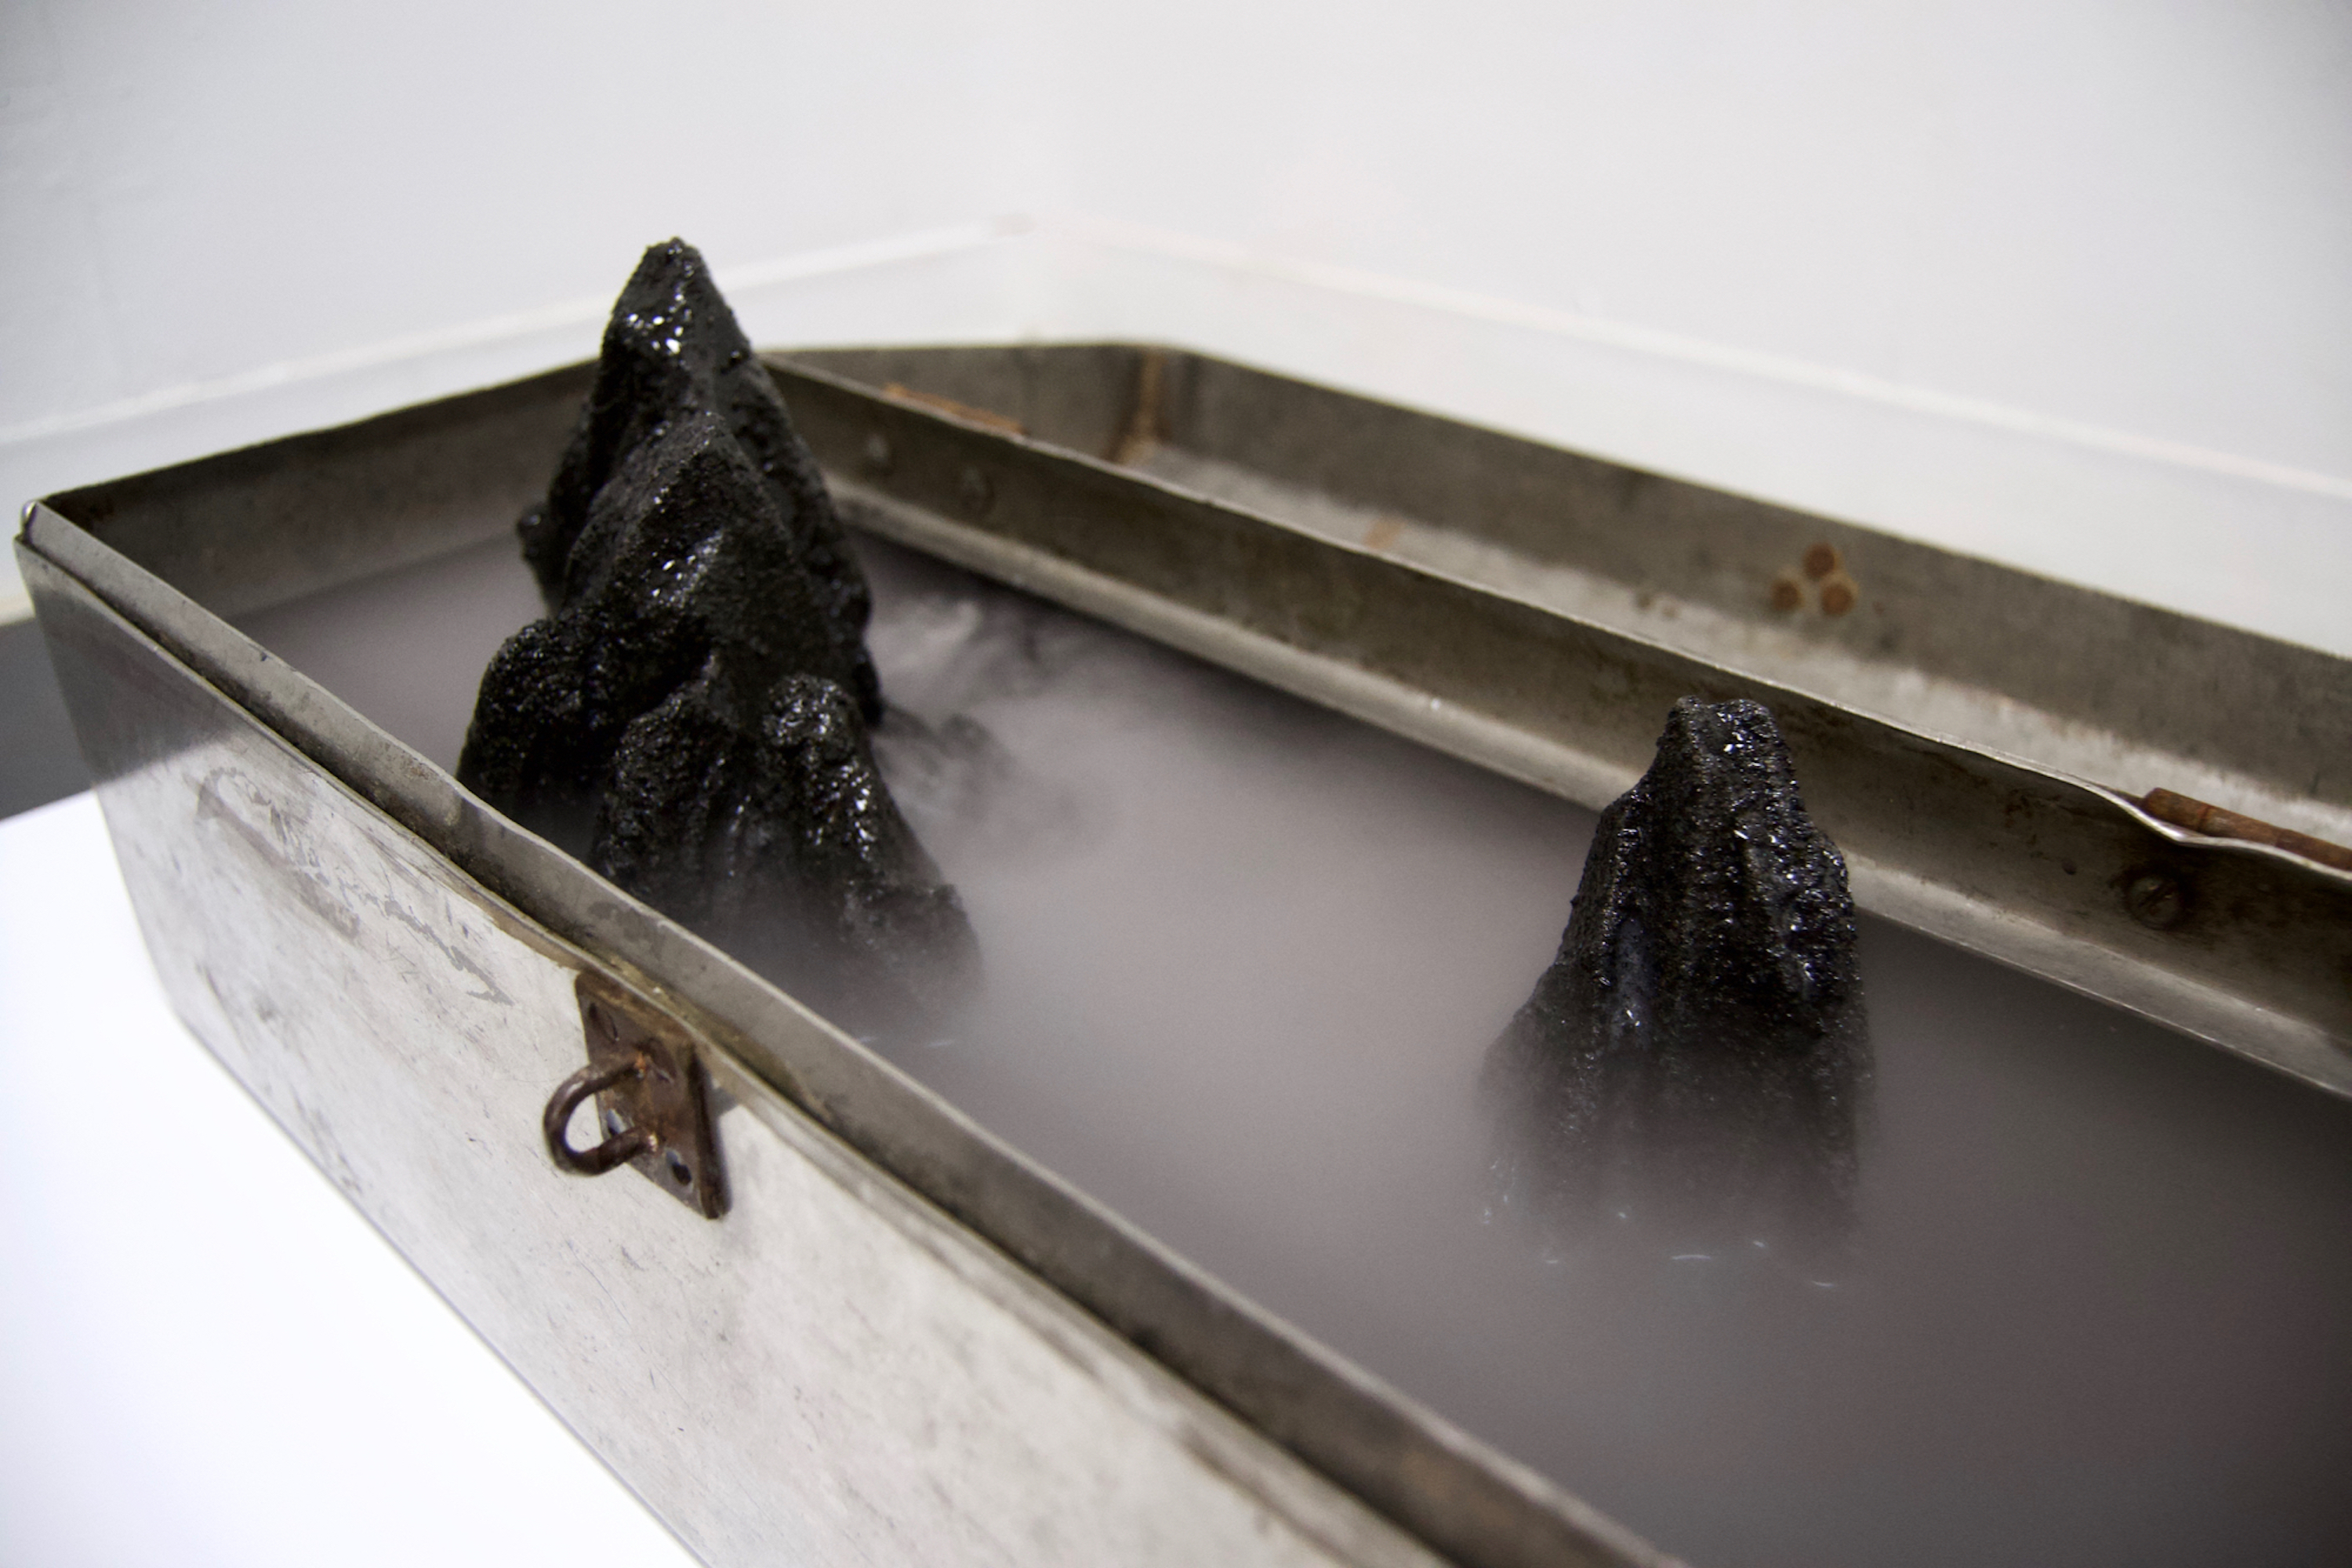 Caroline Hatfield, Depths and Distances, 2019, 5.5" x 20.5" x 15", found object (tool box), resin bonded coal slag, water, mist maker